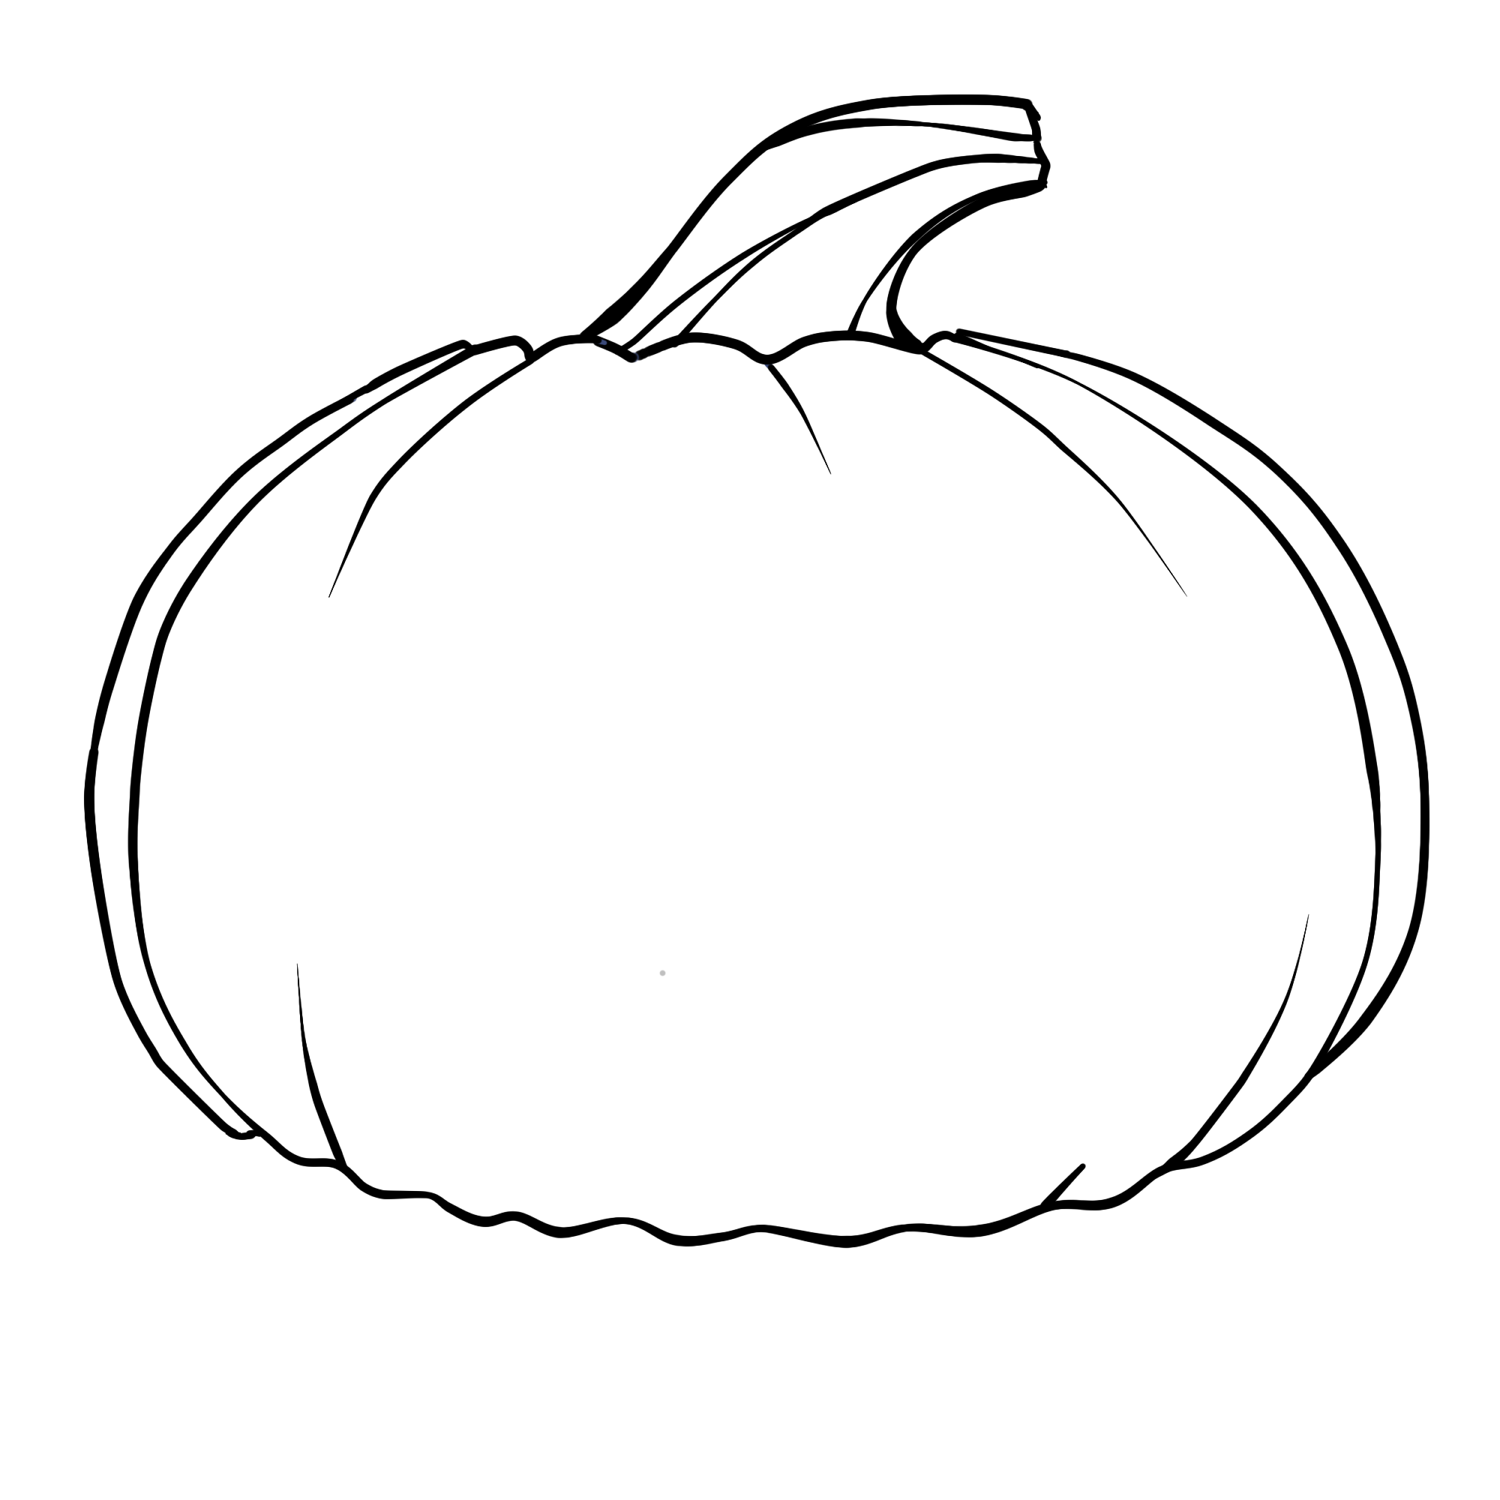 pumpkin template it
 Free Blank Pumpkin Template, Download Free Clip Art, Free ...